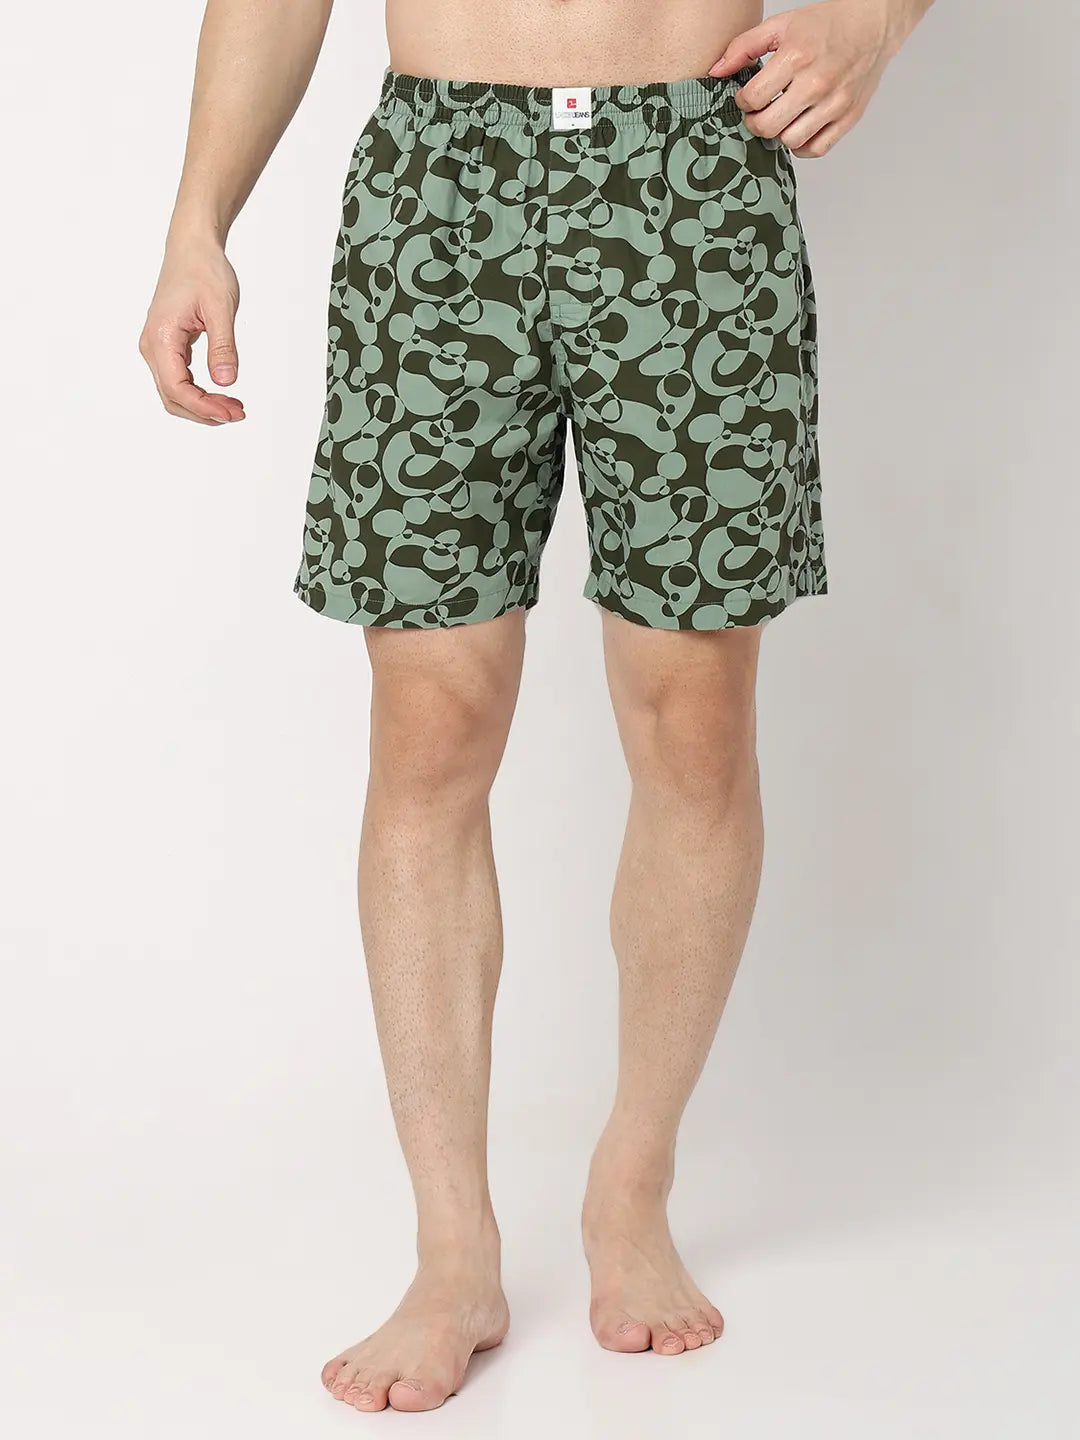 Underjeans by Spykar Men Premium Green Cotton Blend Regular Fit Boxer Shorts